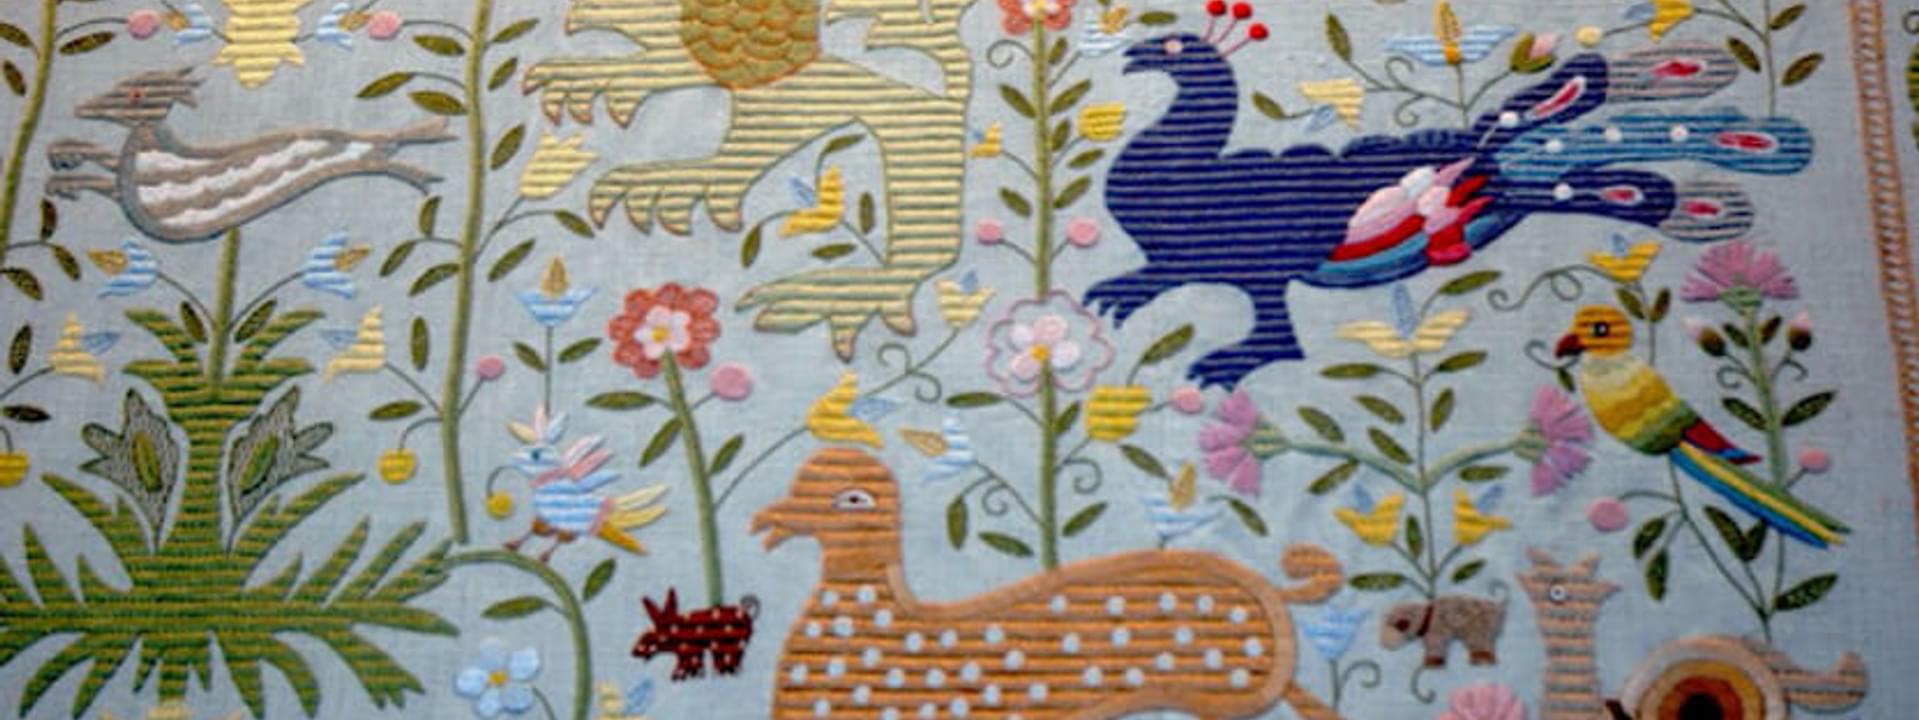 Embroideries of Castelo Branco